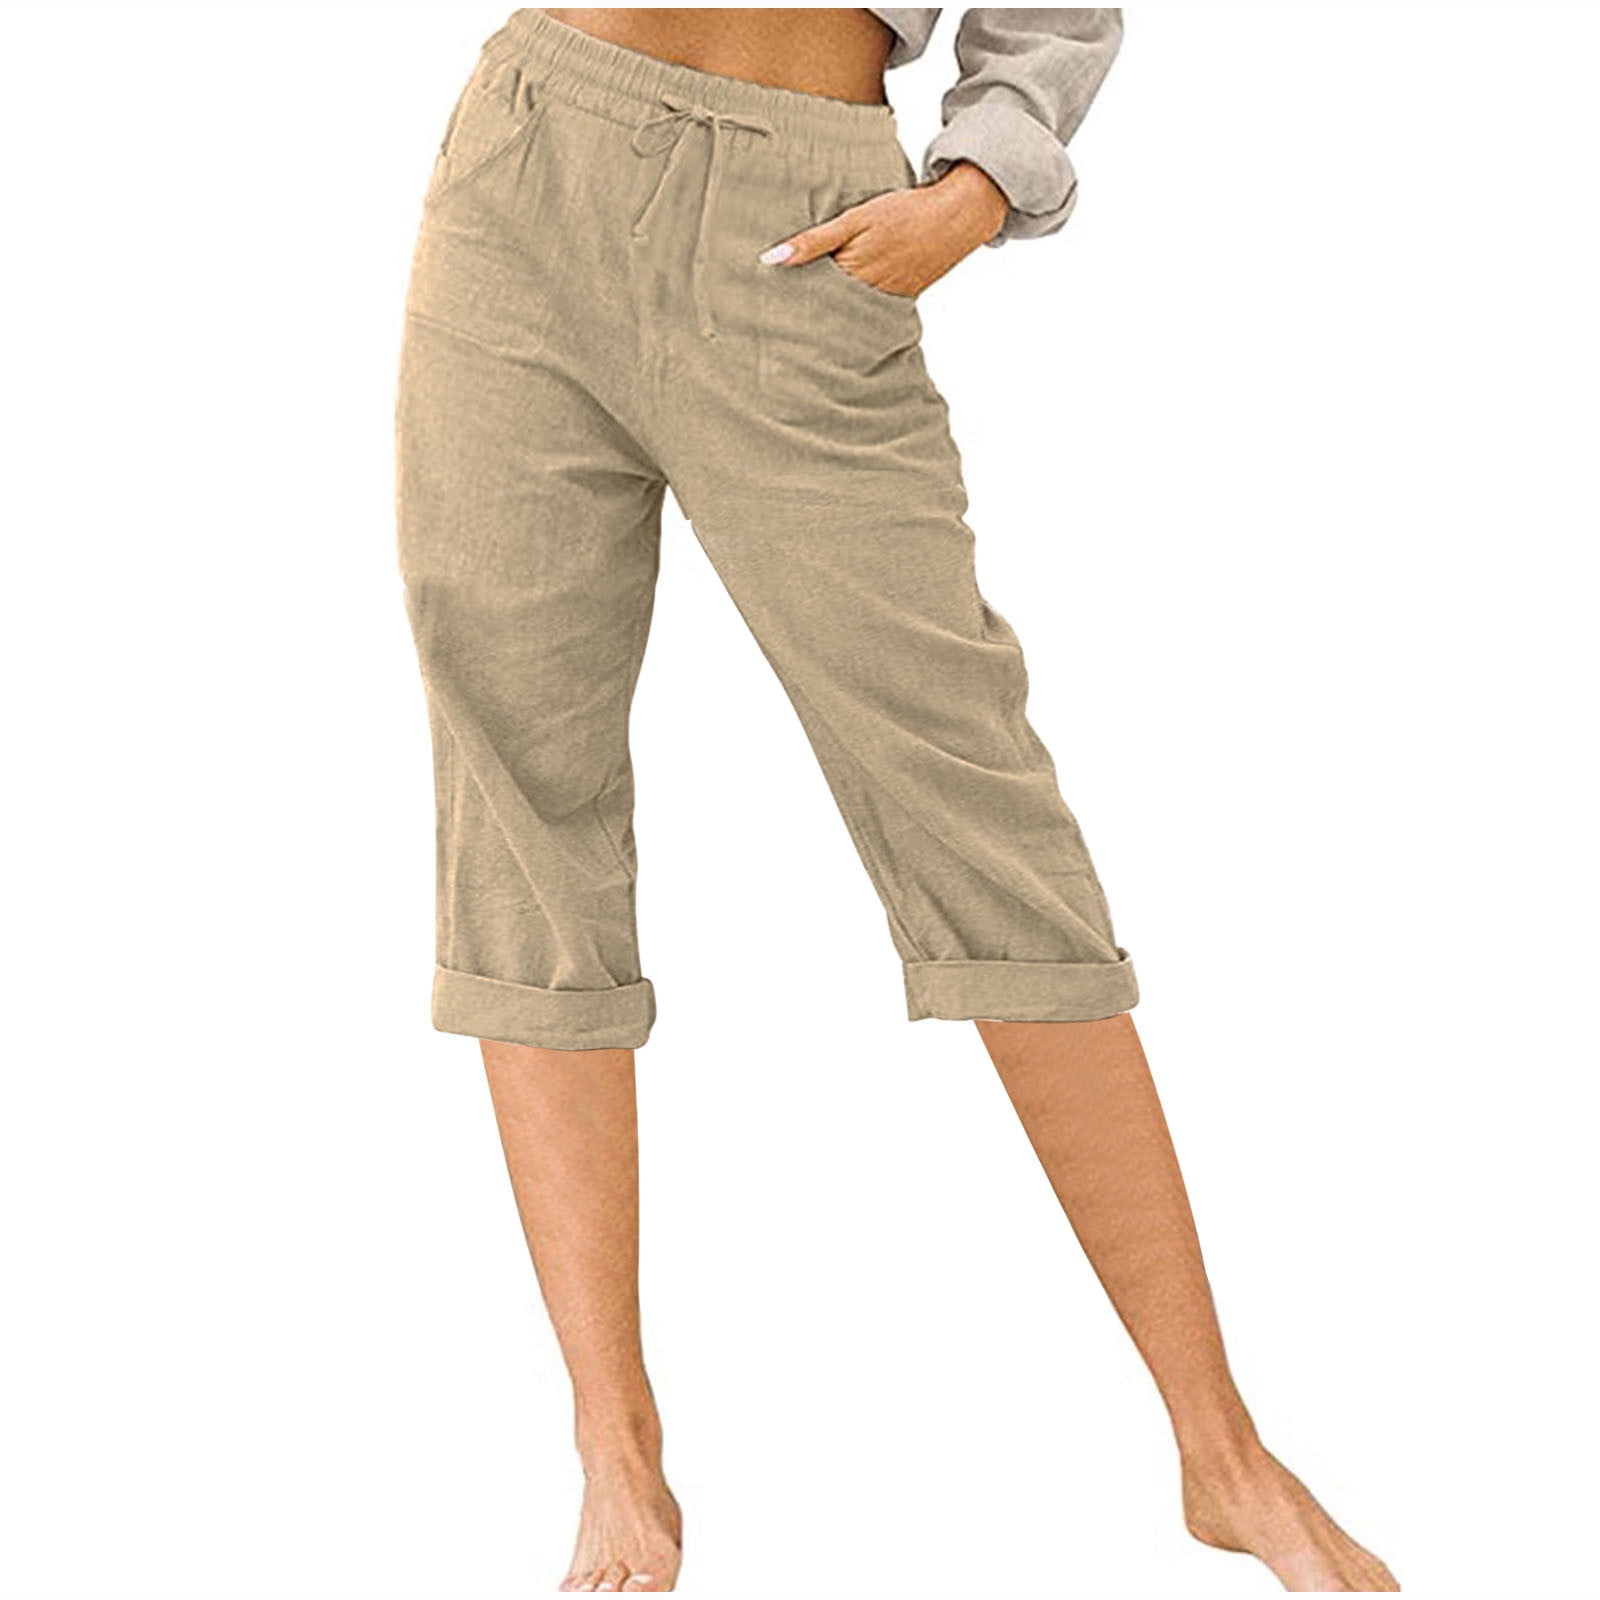 Annhoo Cotton Linen Capri Pants for Women Casual Plus Size High Elastic ...